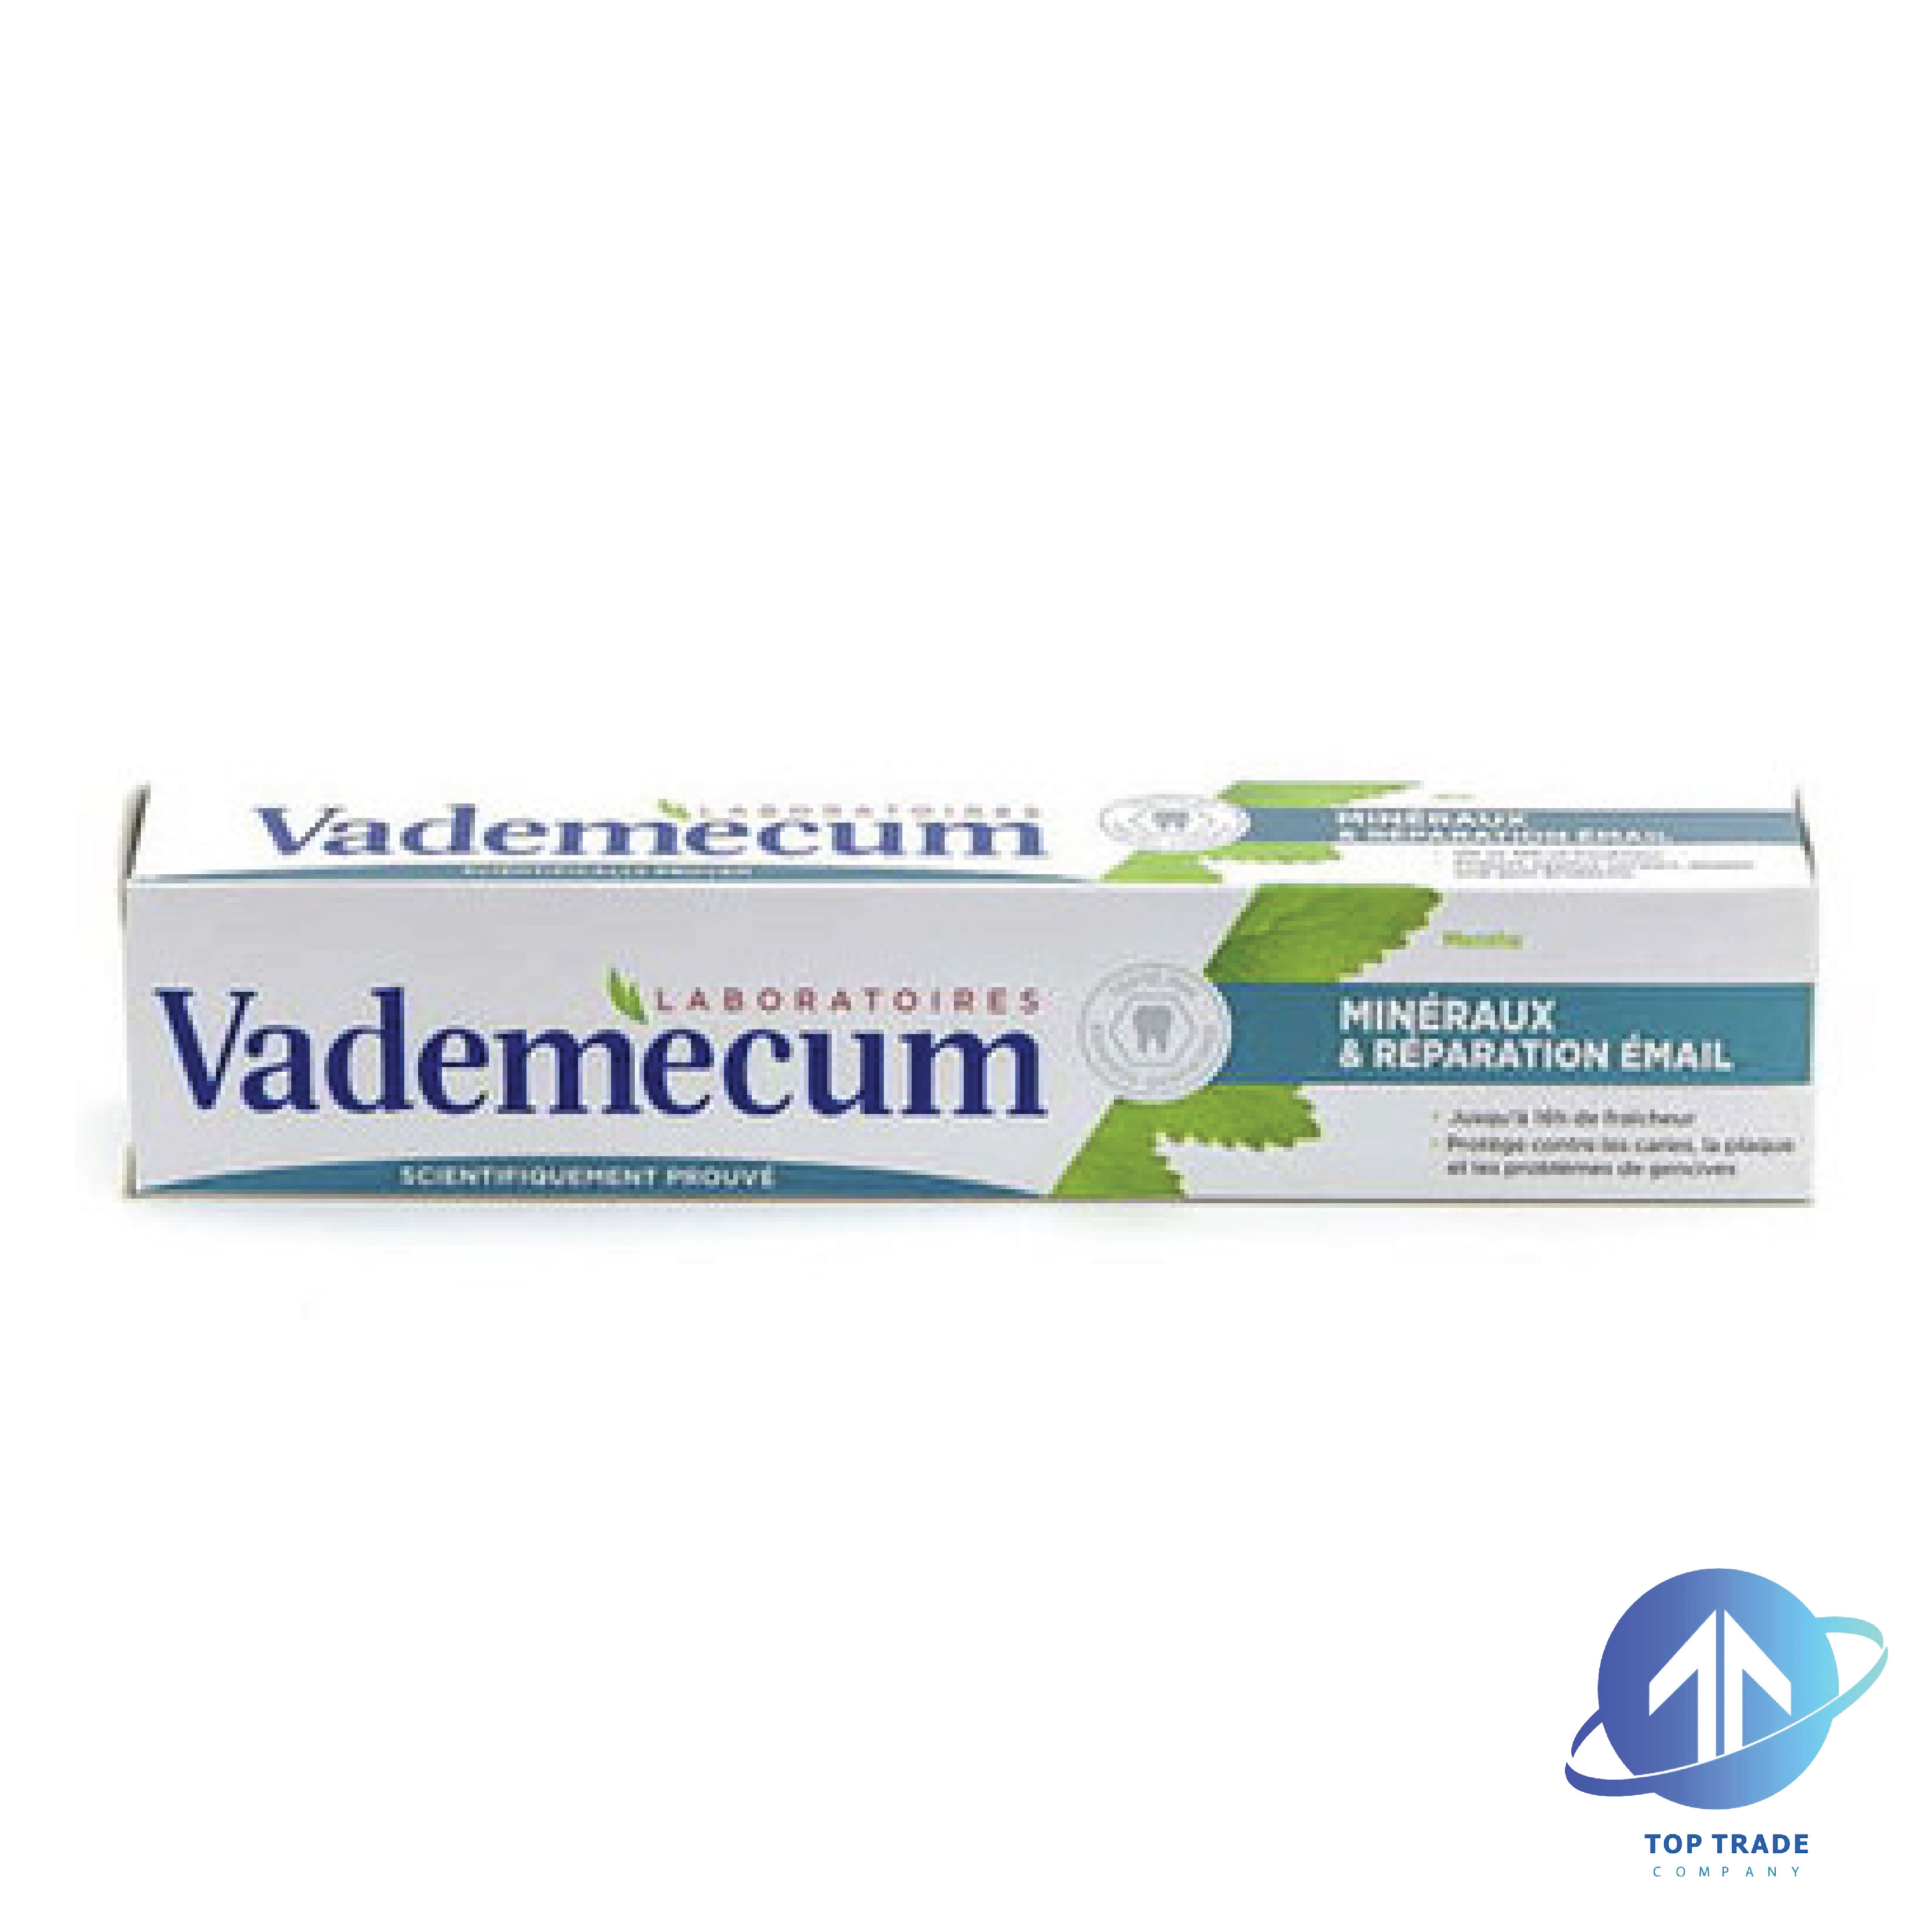 Vademecum toothpaste minerals & glaze repairer 65ml 